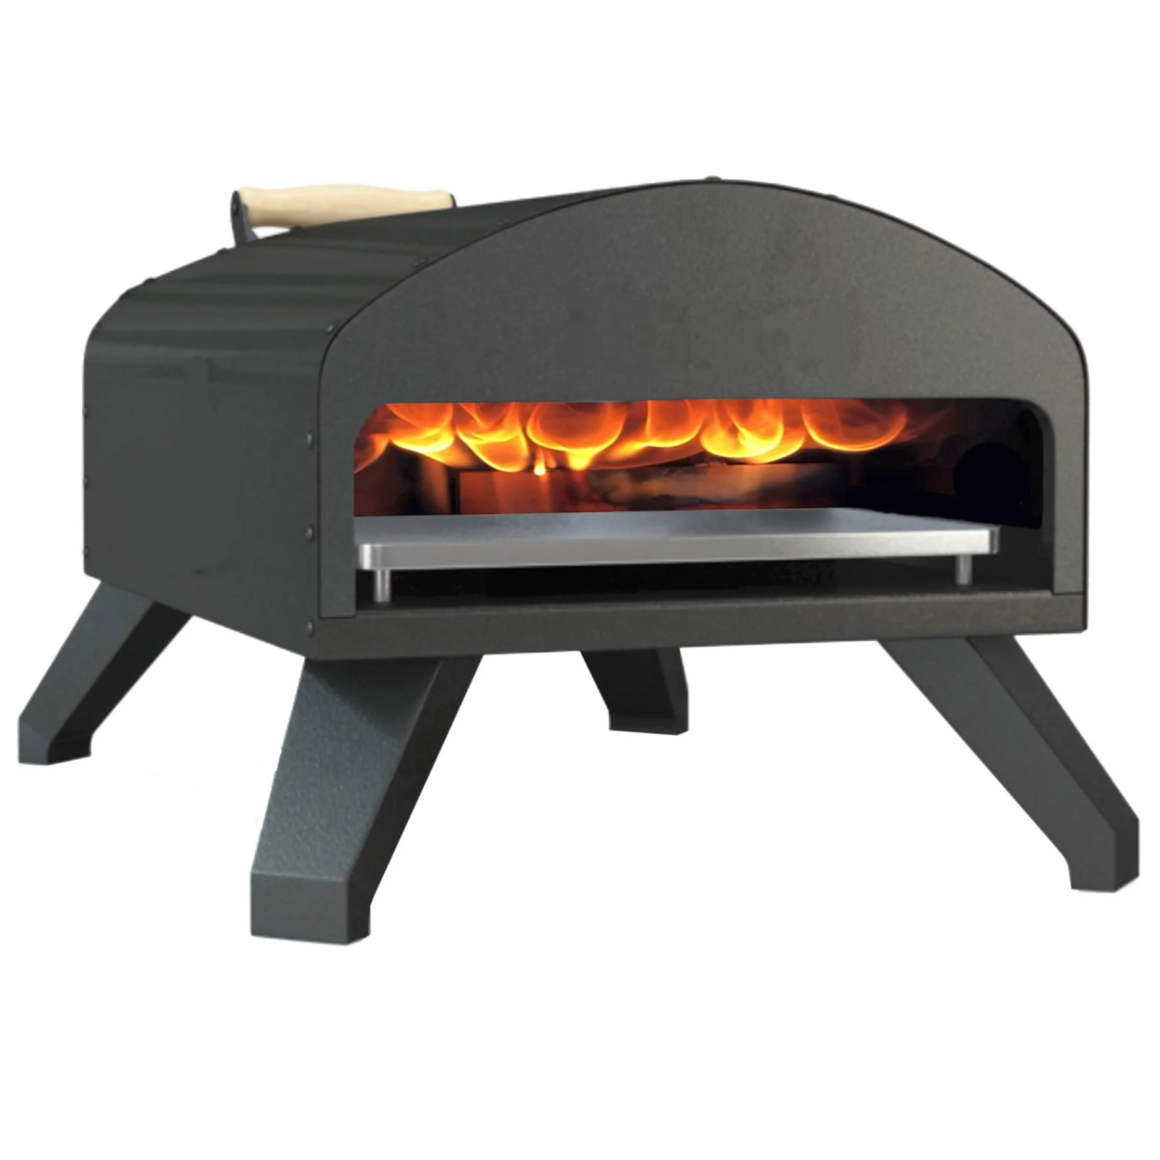 Brændefyret pizzaovn fra Bertello - Perfekt til den lækre pizza